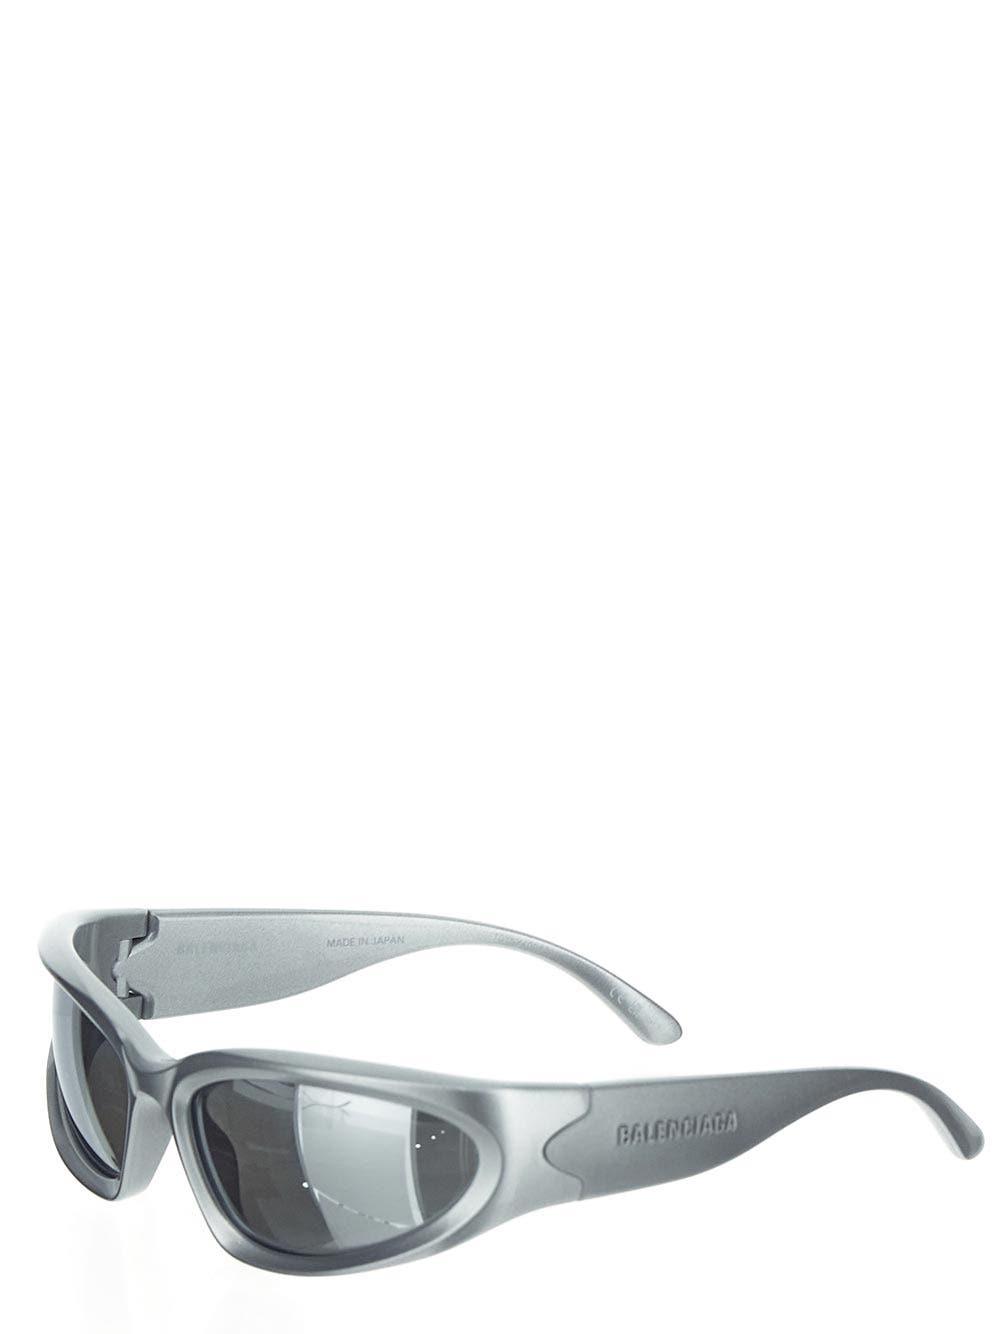 Balenciaga Swift Oval Sunglasses in Metallic | Lyst